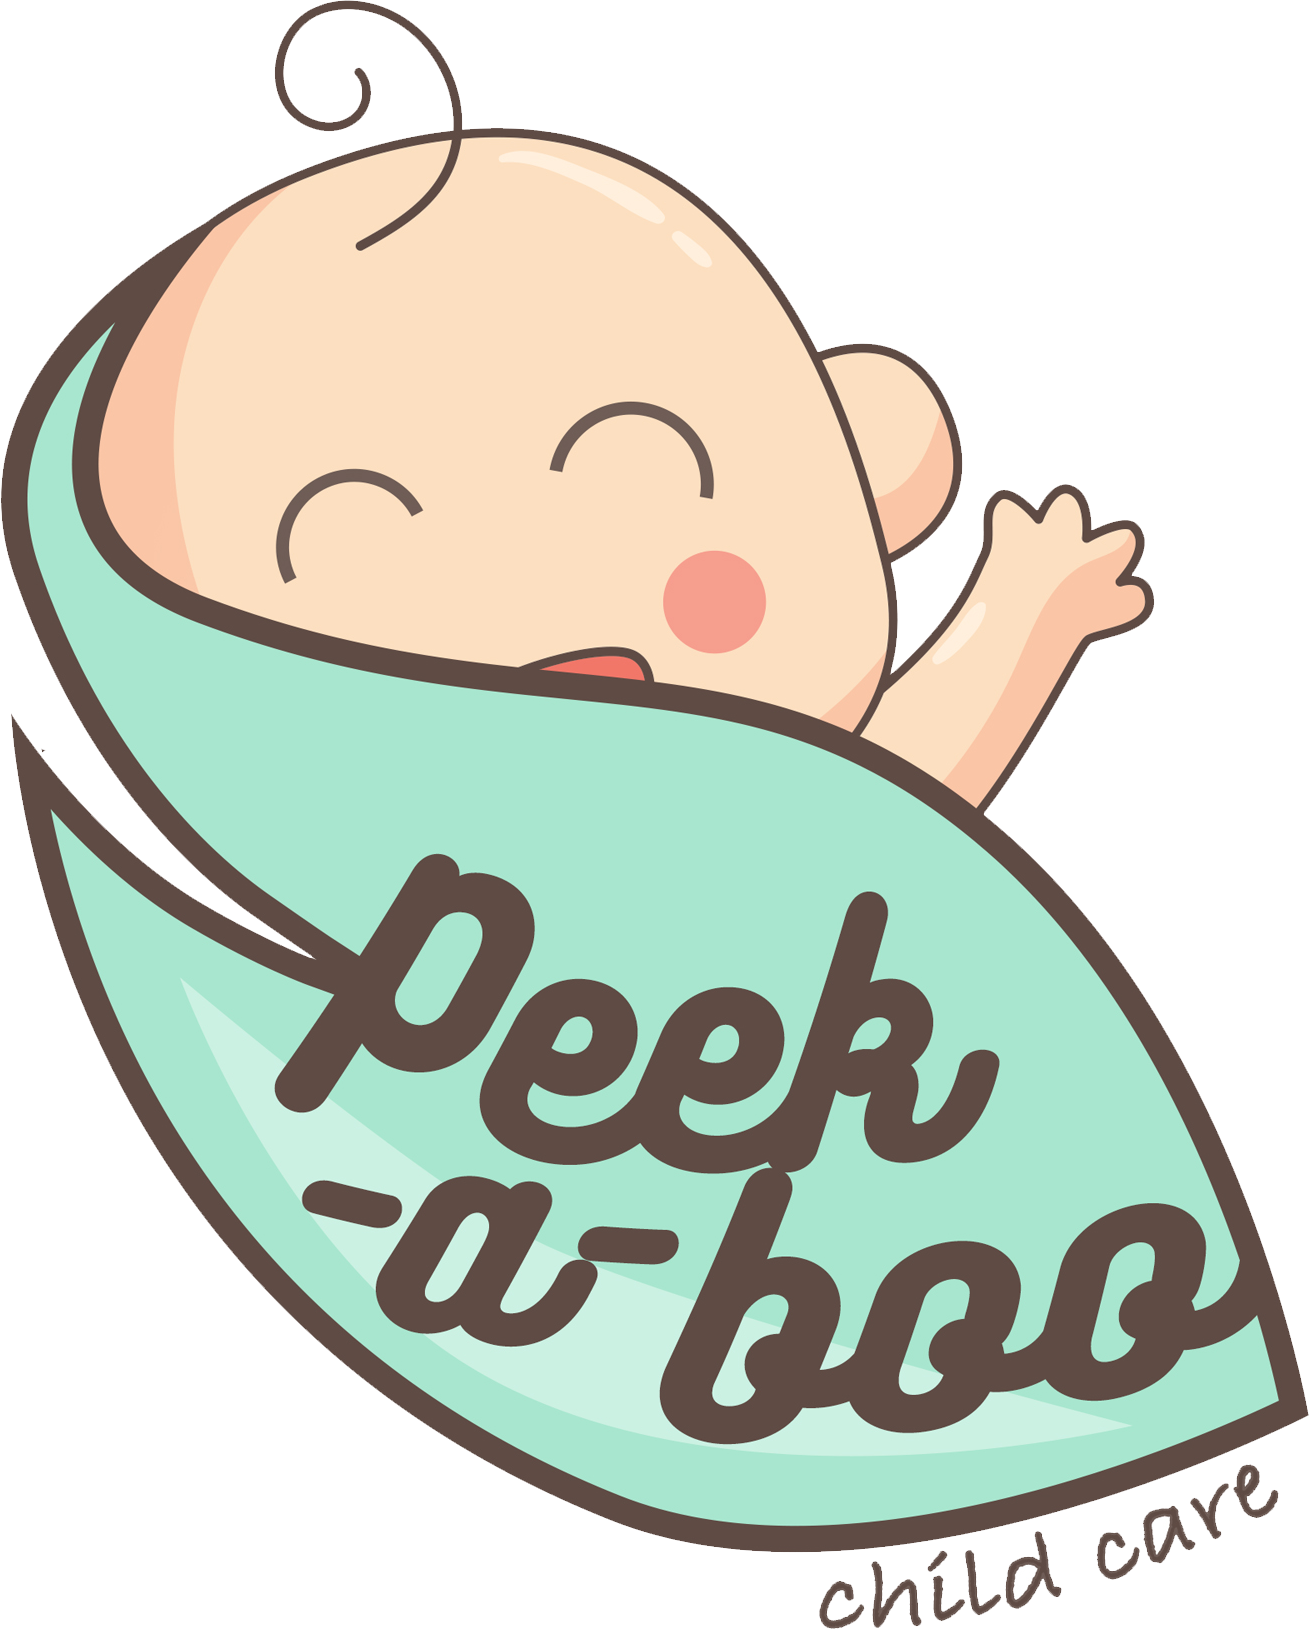 Peekaboo Child Care - Peekaboo Child Care (1309x1629)